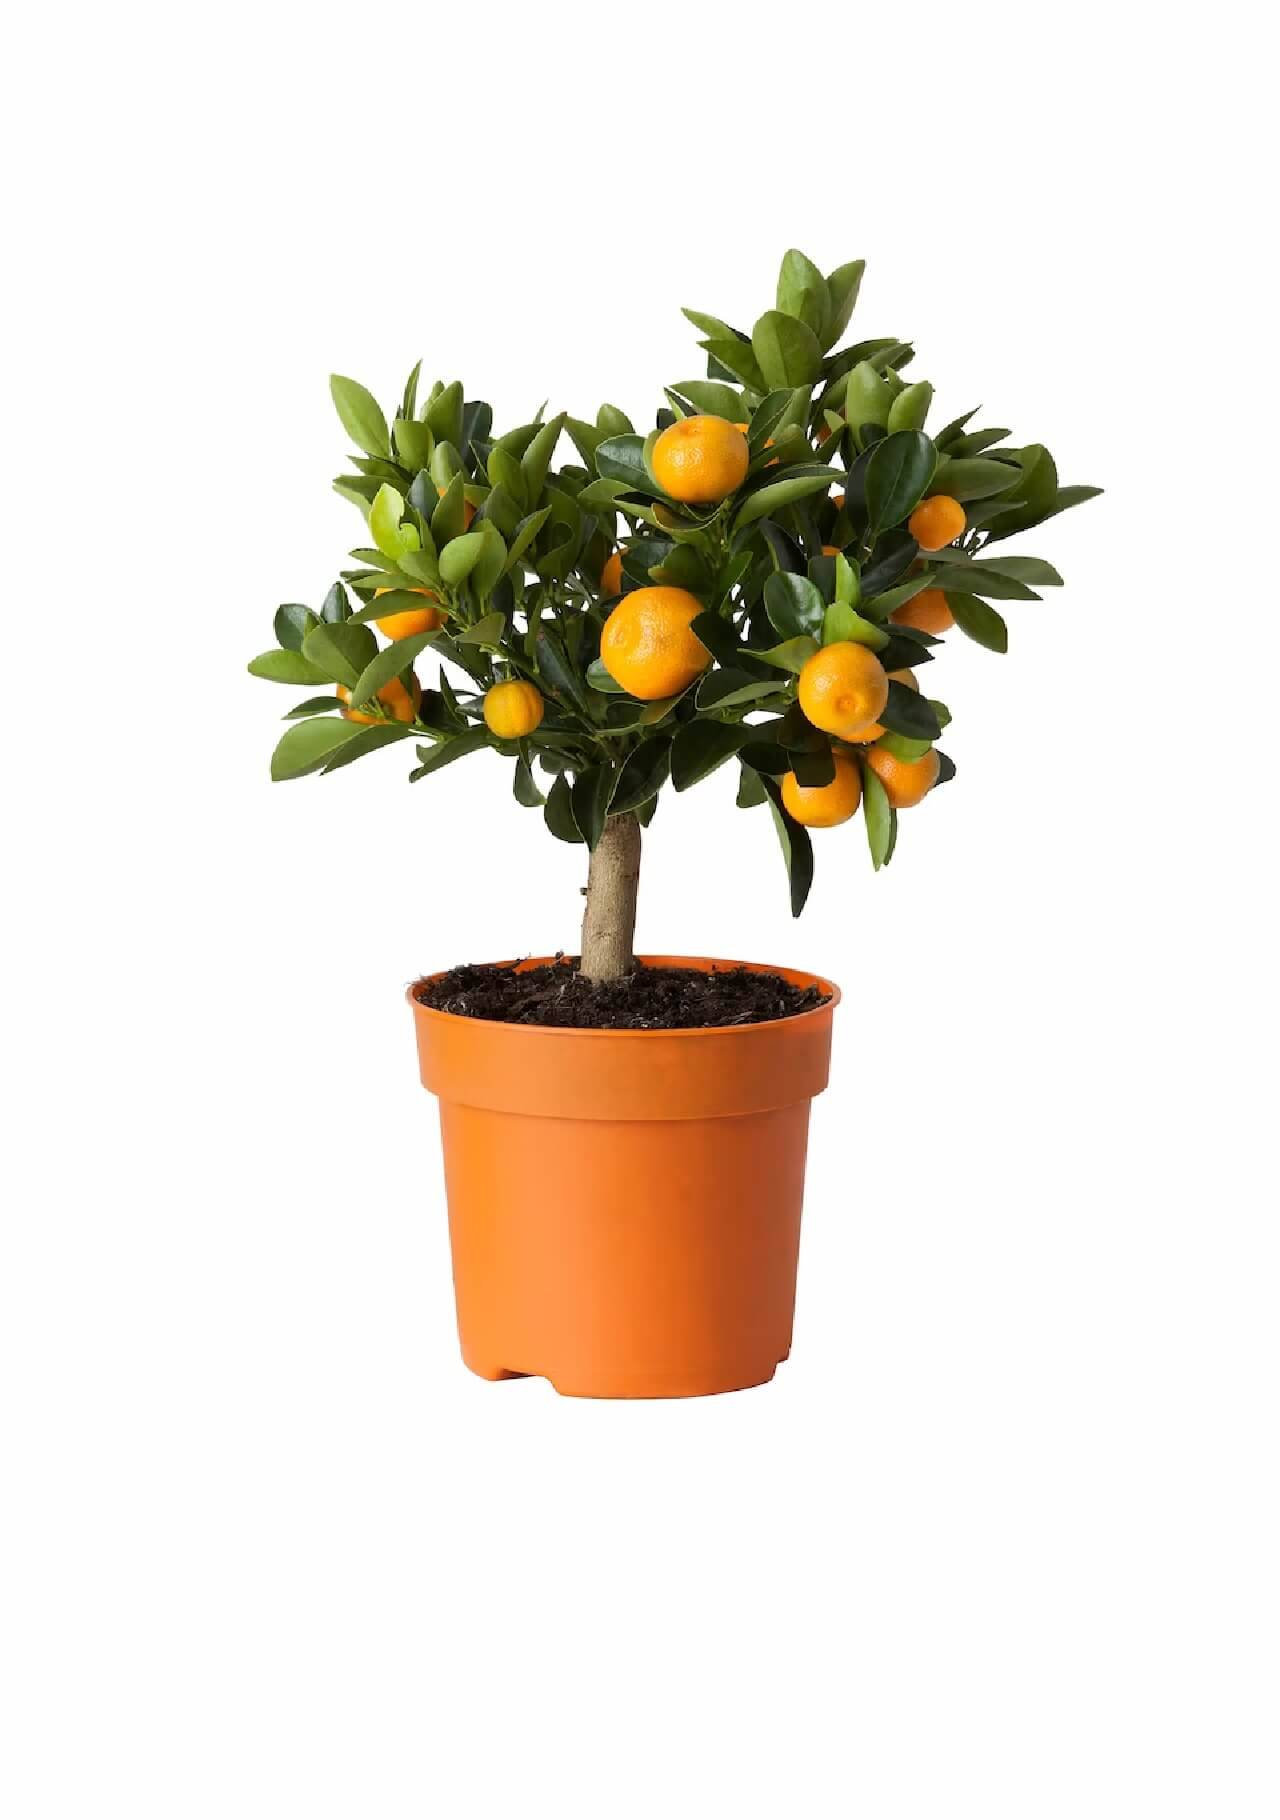 Plantas de Ikea Citrus calamondin